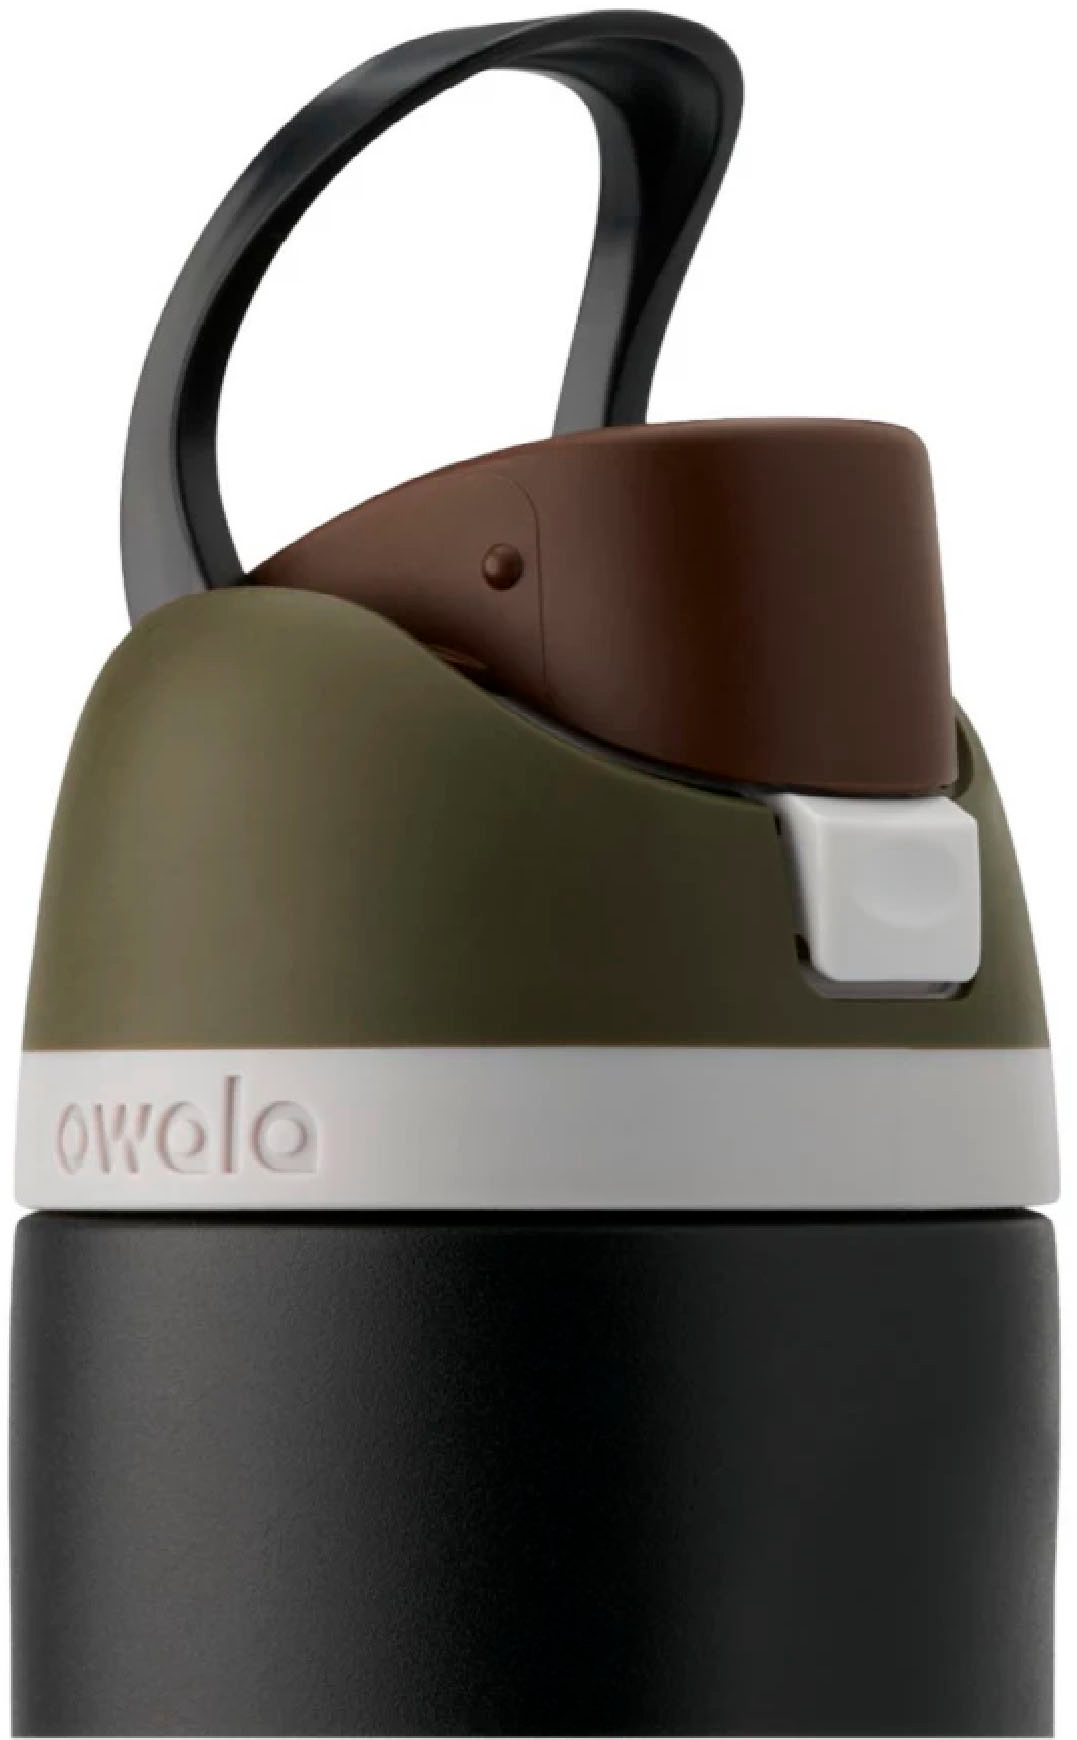 Owala FreeSip 24 oz Water Bottle by Dwell - Dwell